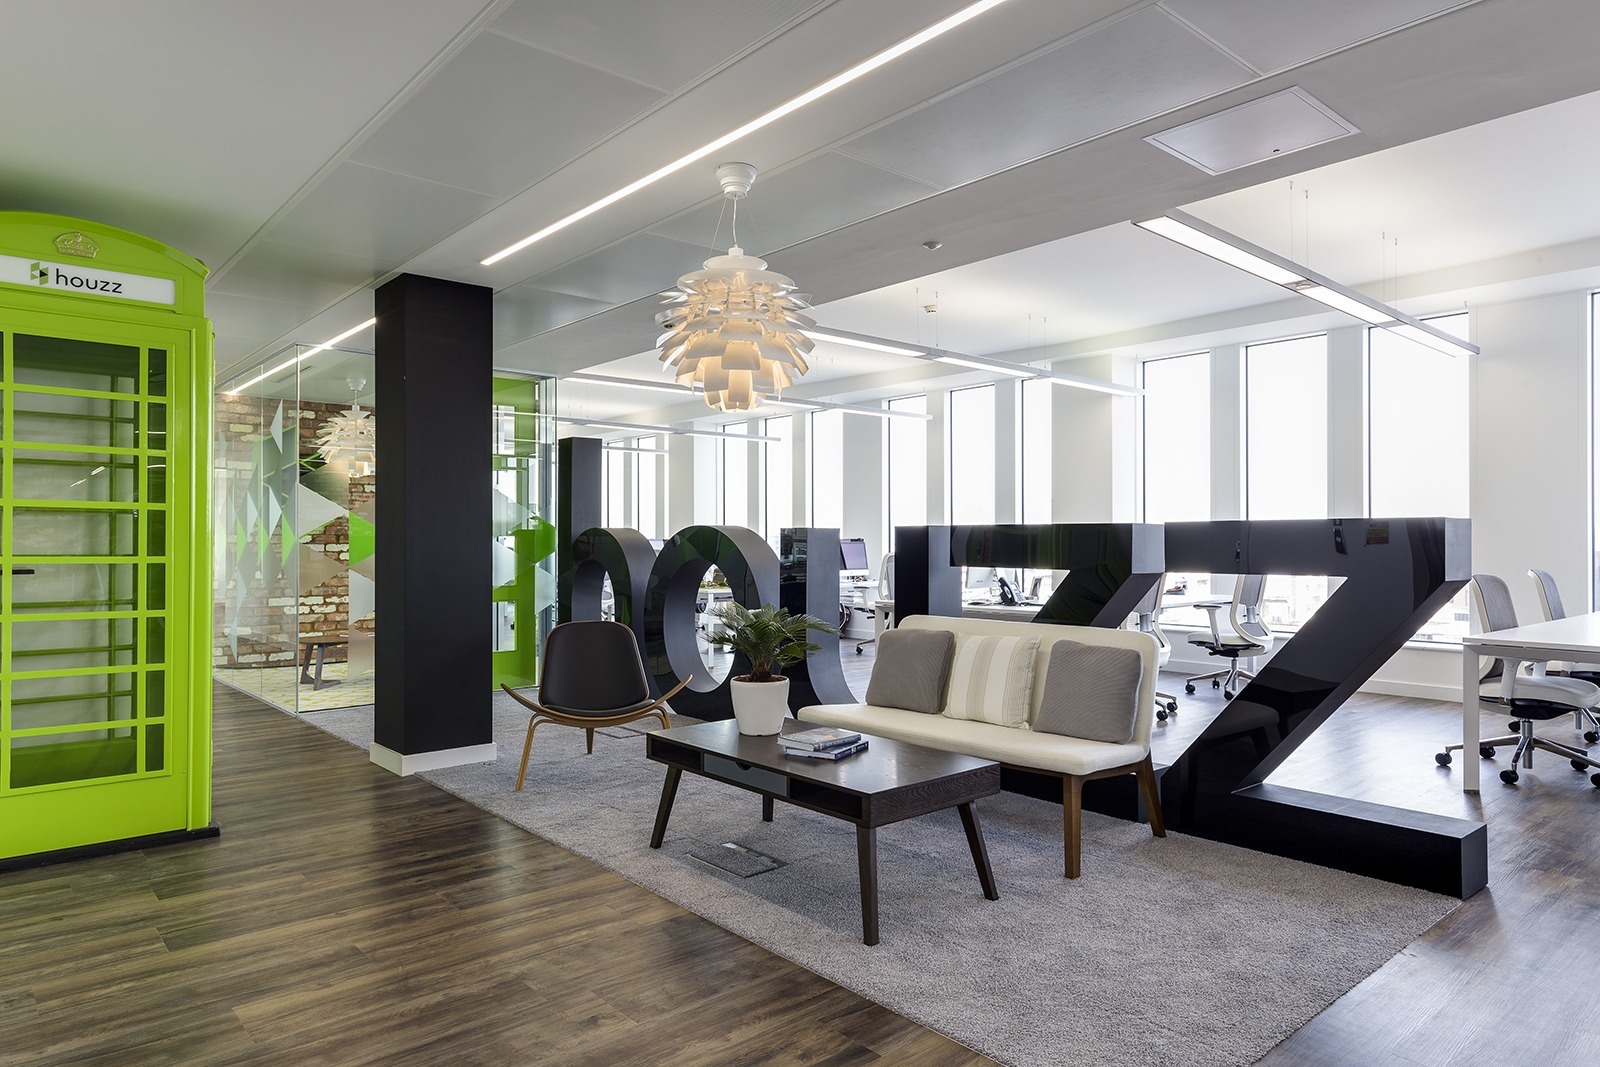 A Tour of Houzz’s New European Headquarters - Officelovin'